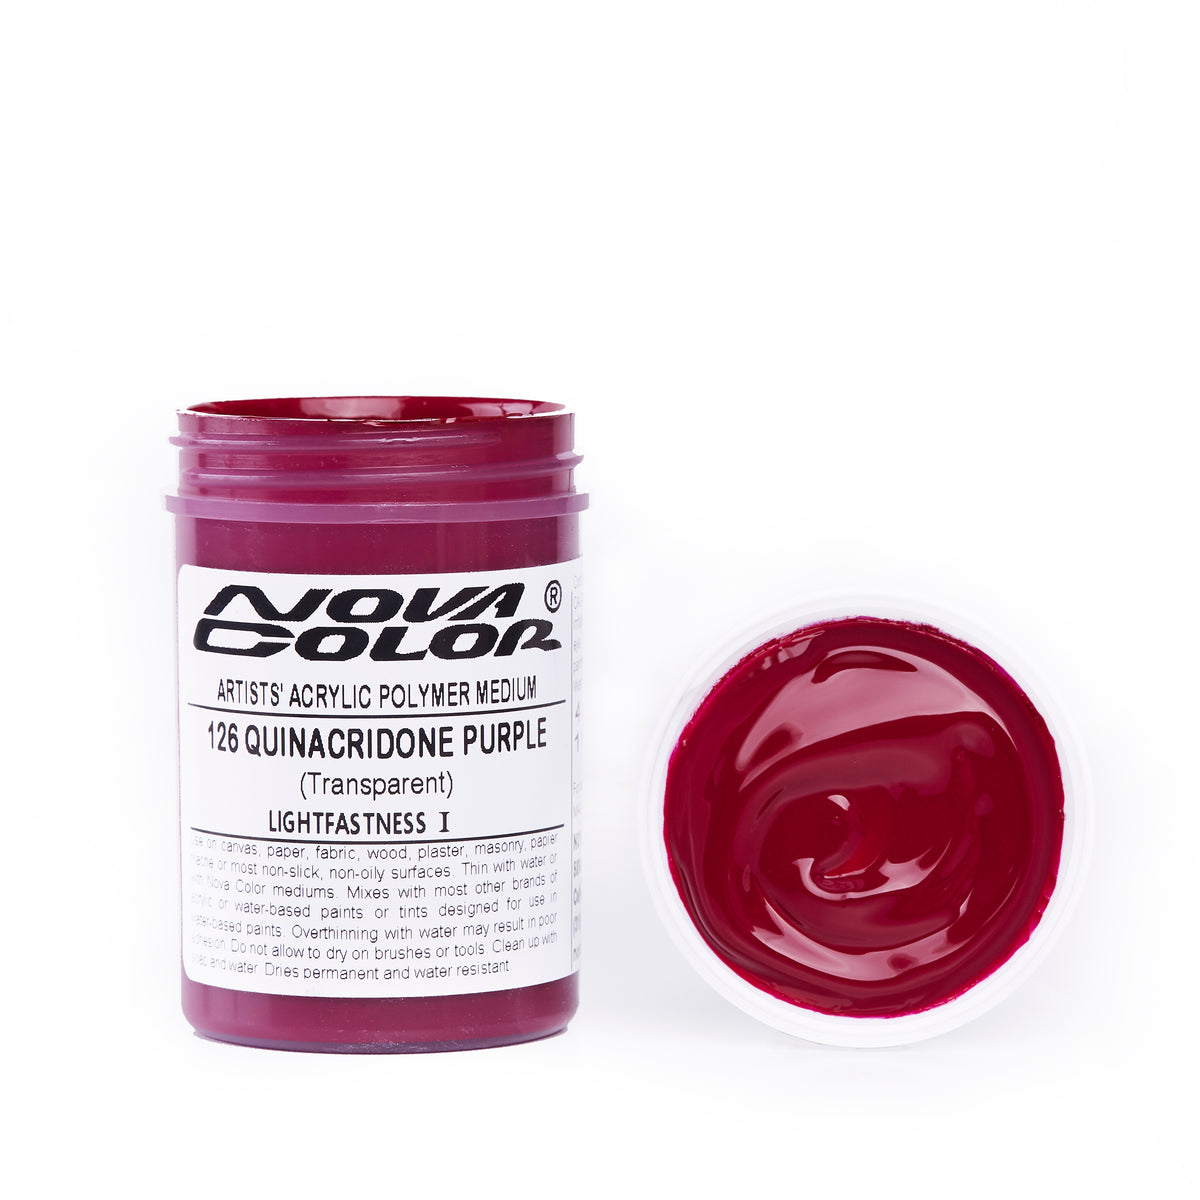 Buy #126 Quinacridone Purple - Lightfastness:, - Transparent Online